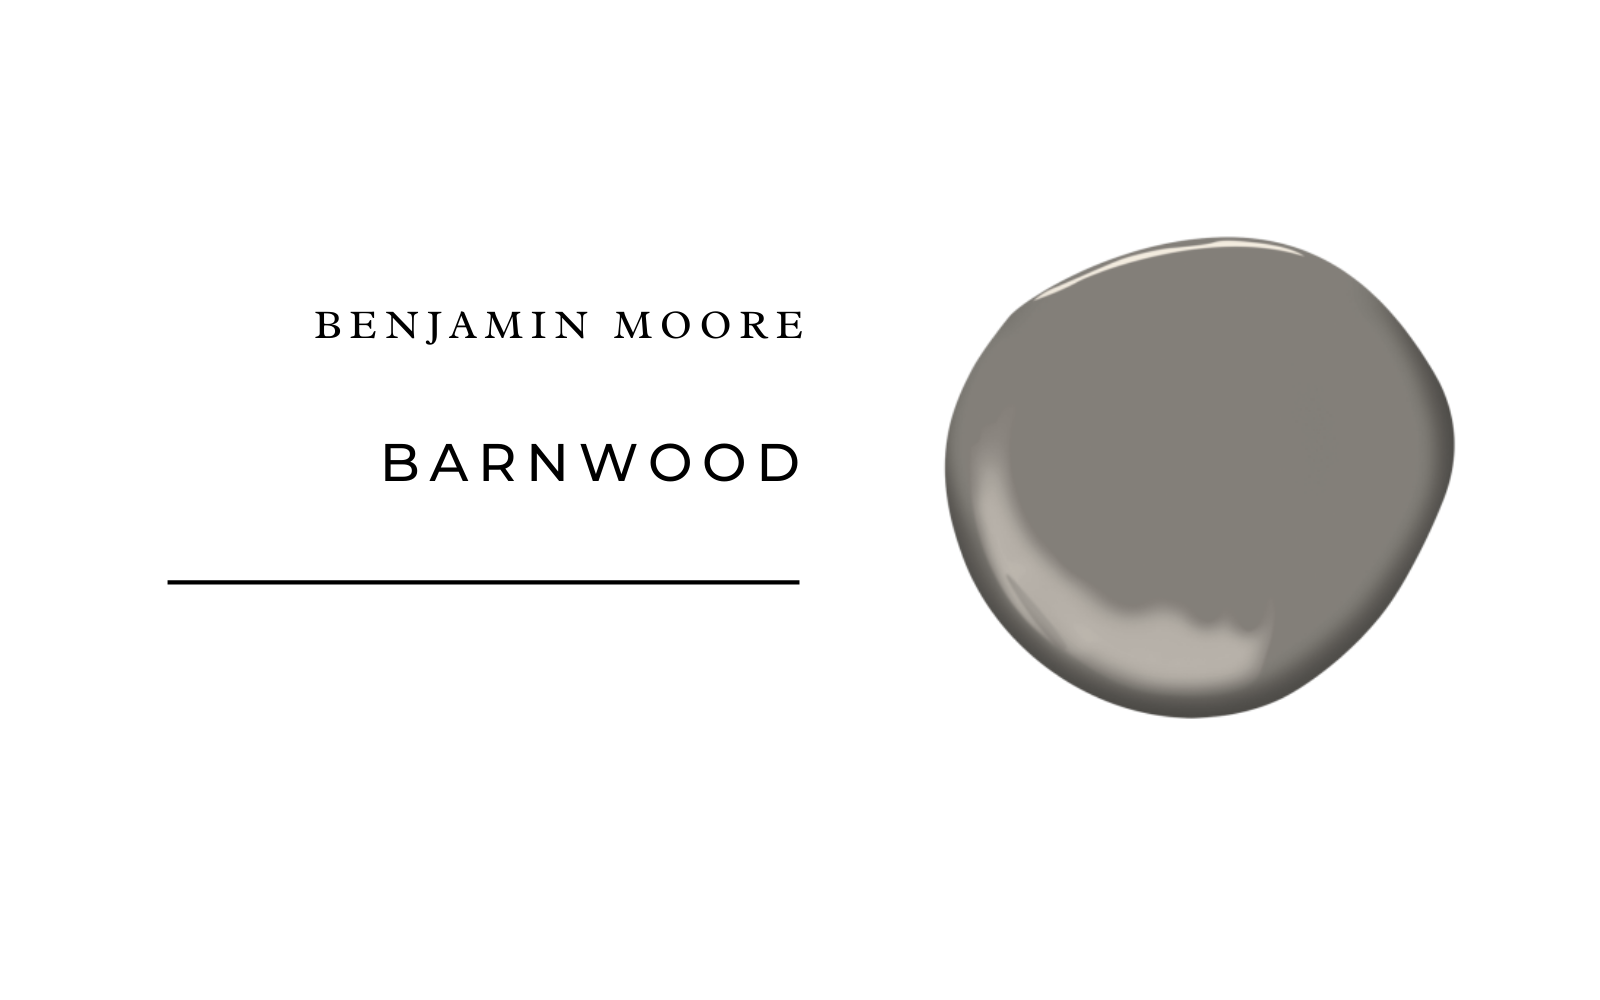 banjamin moore barnwood gray